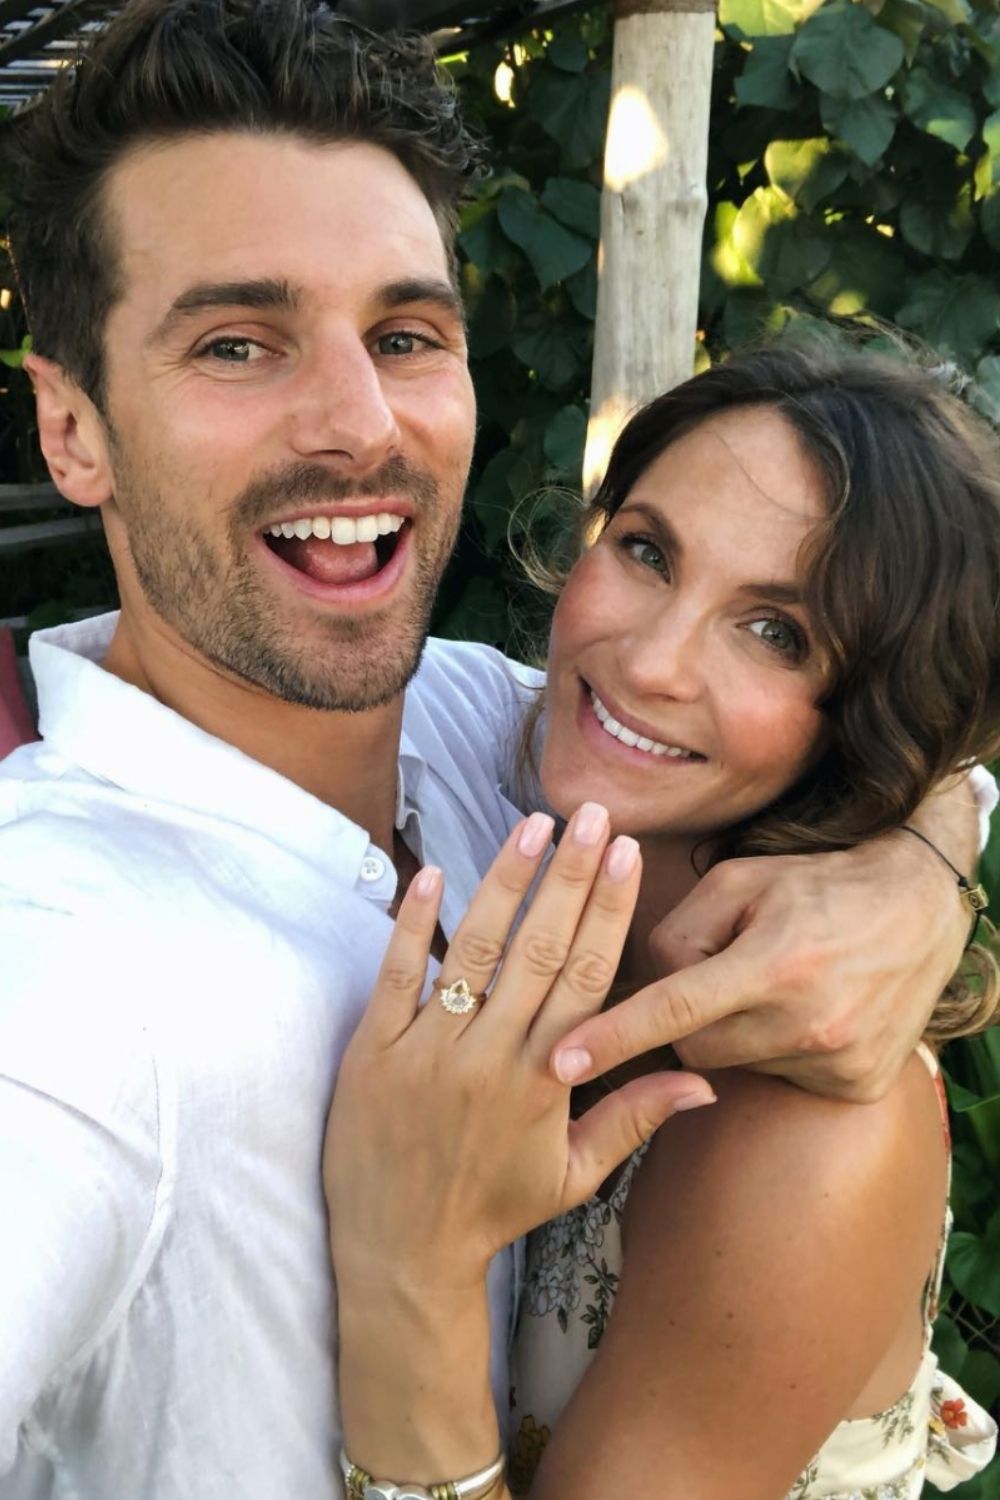 Matty and Laura engaged